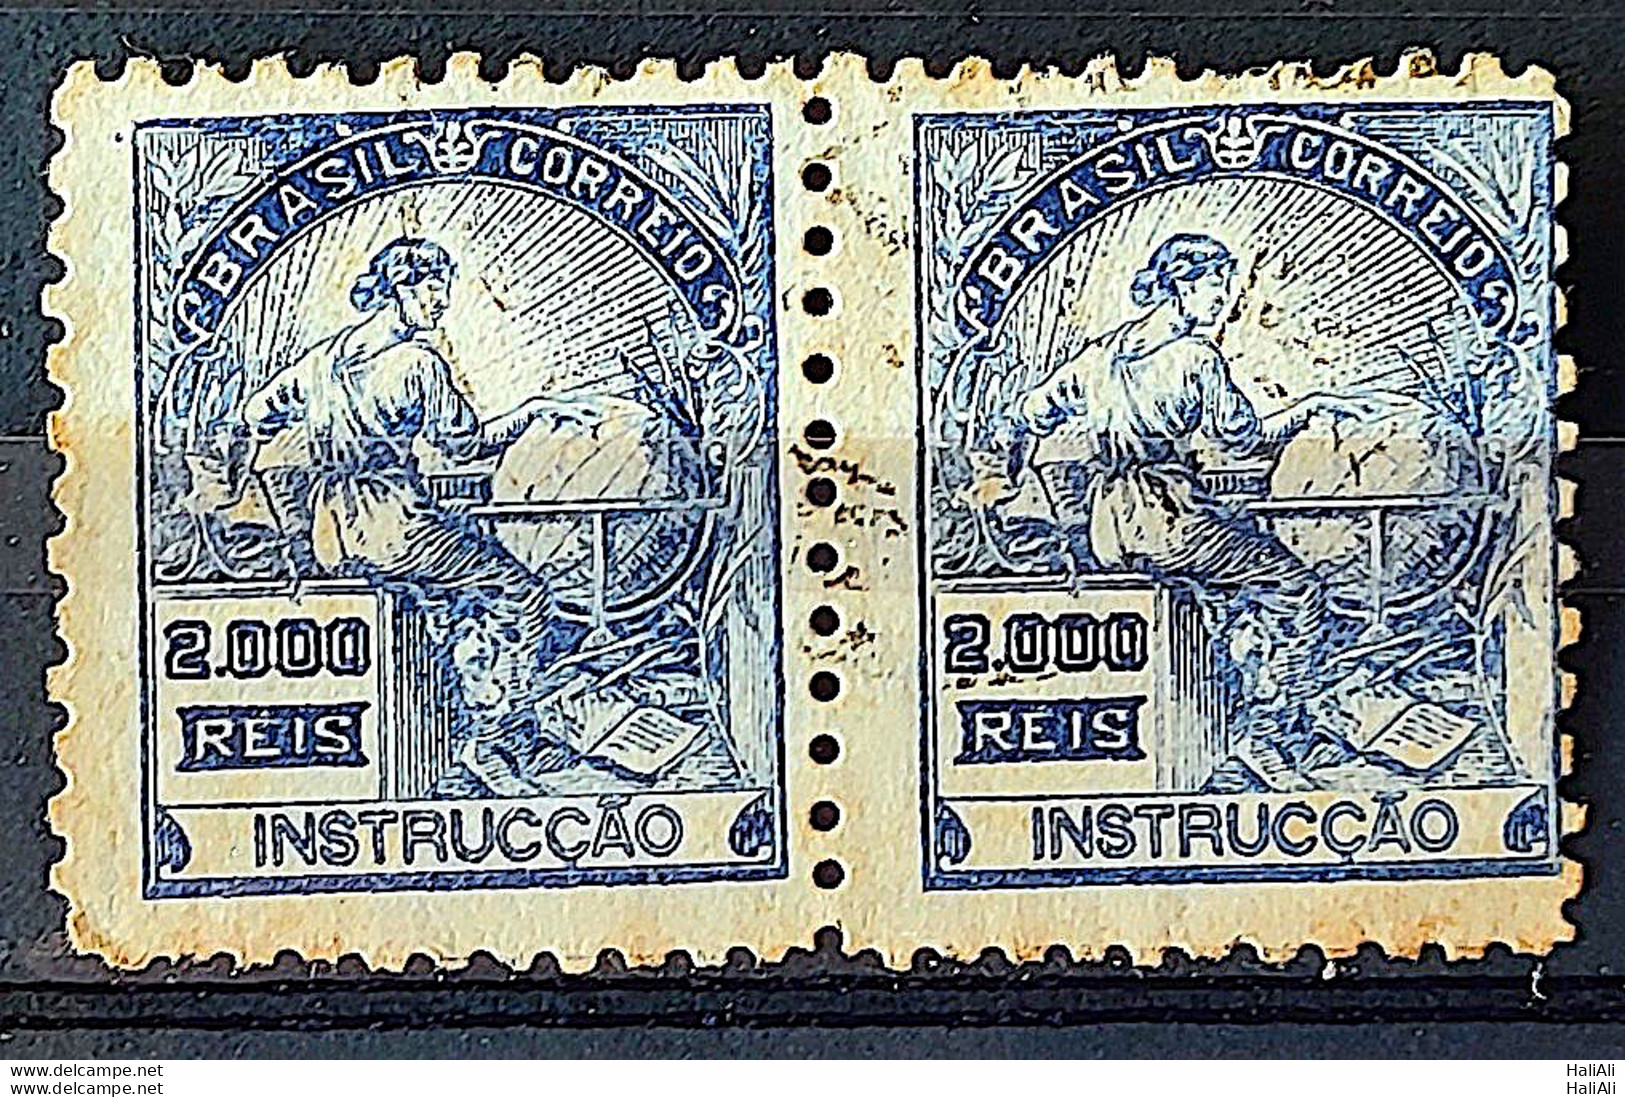 Brazil Regular Stamp Cod Rhm 308 Grandma Instruction 2000 Reis Filigree N 1936 Pair Circulated 2 - Gebraucht